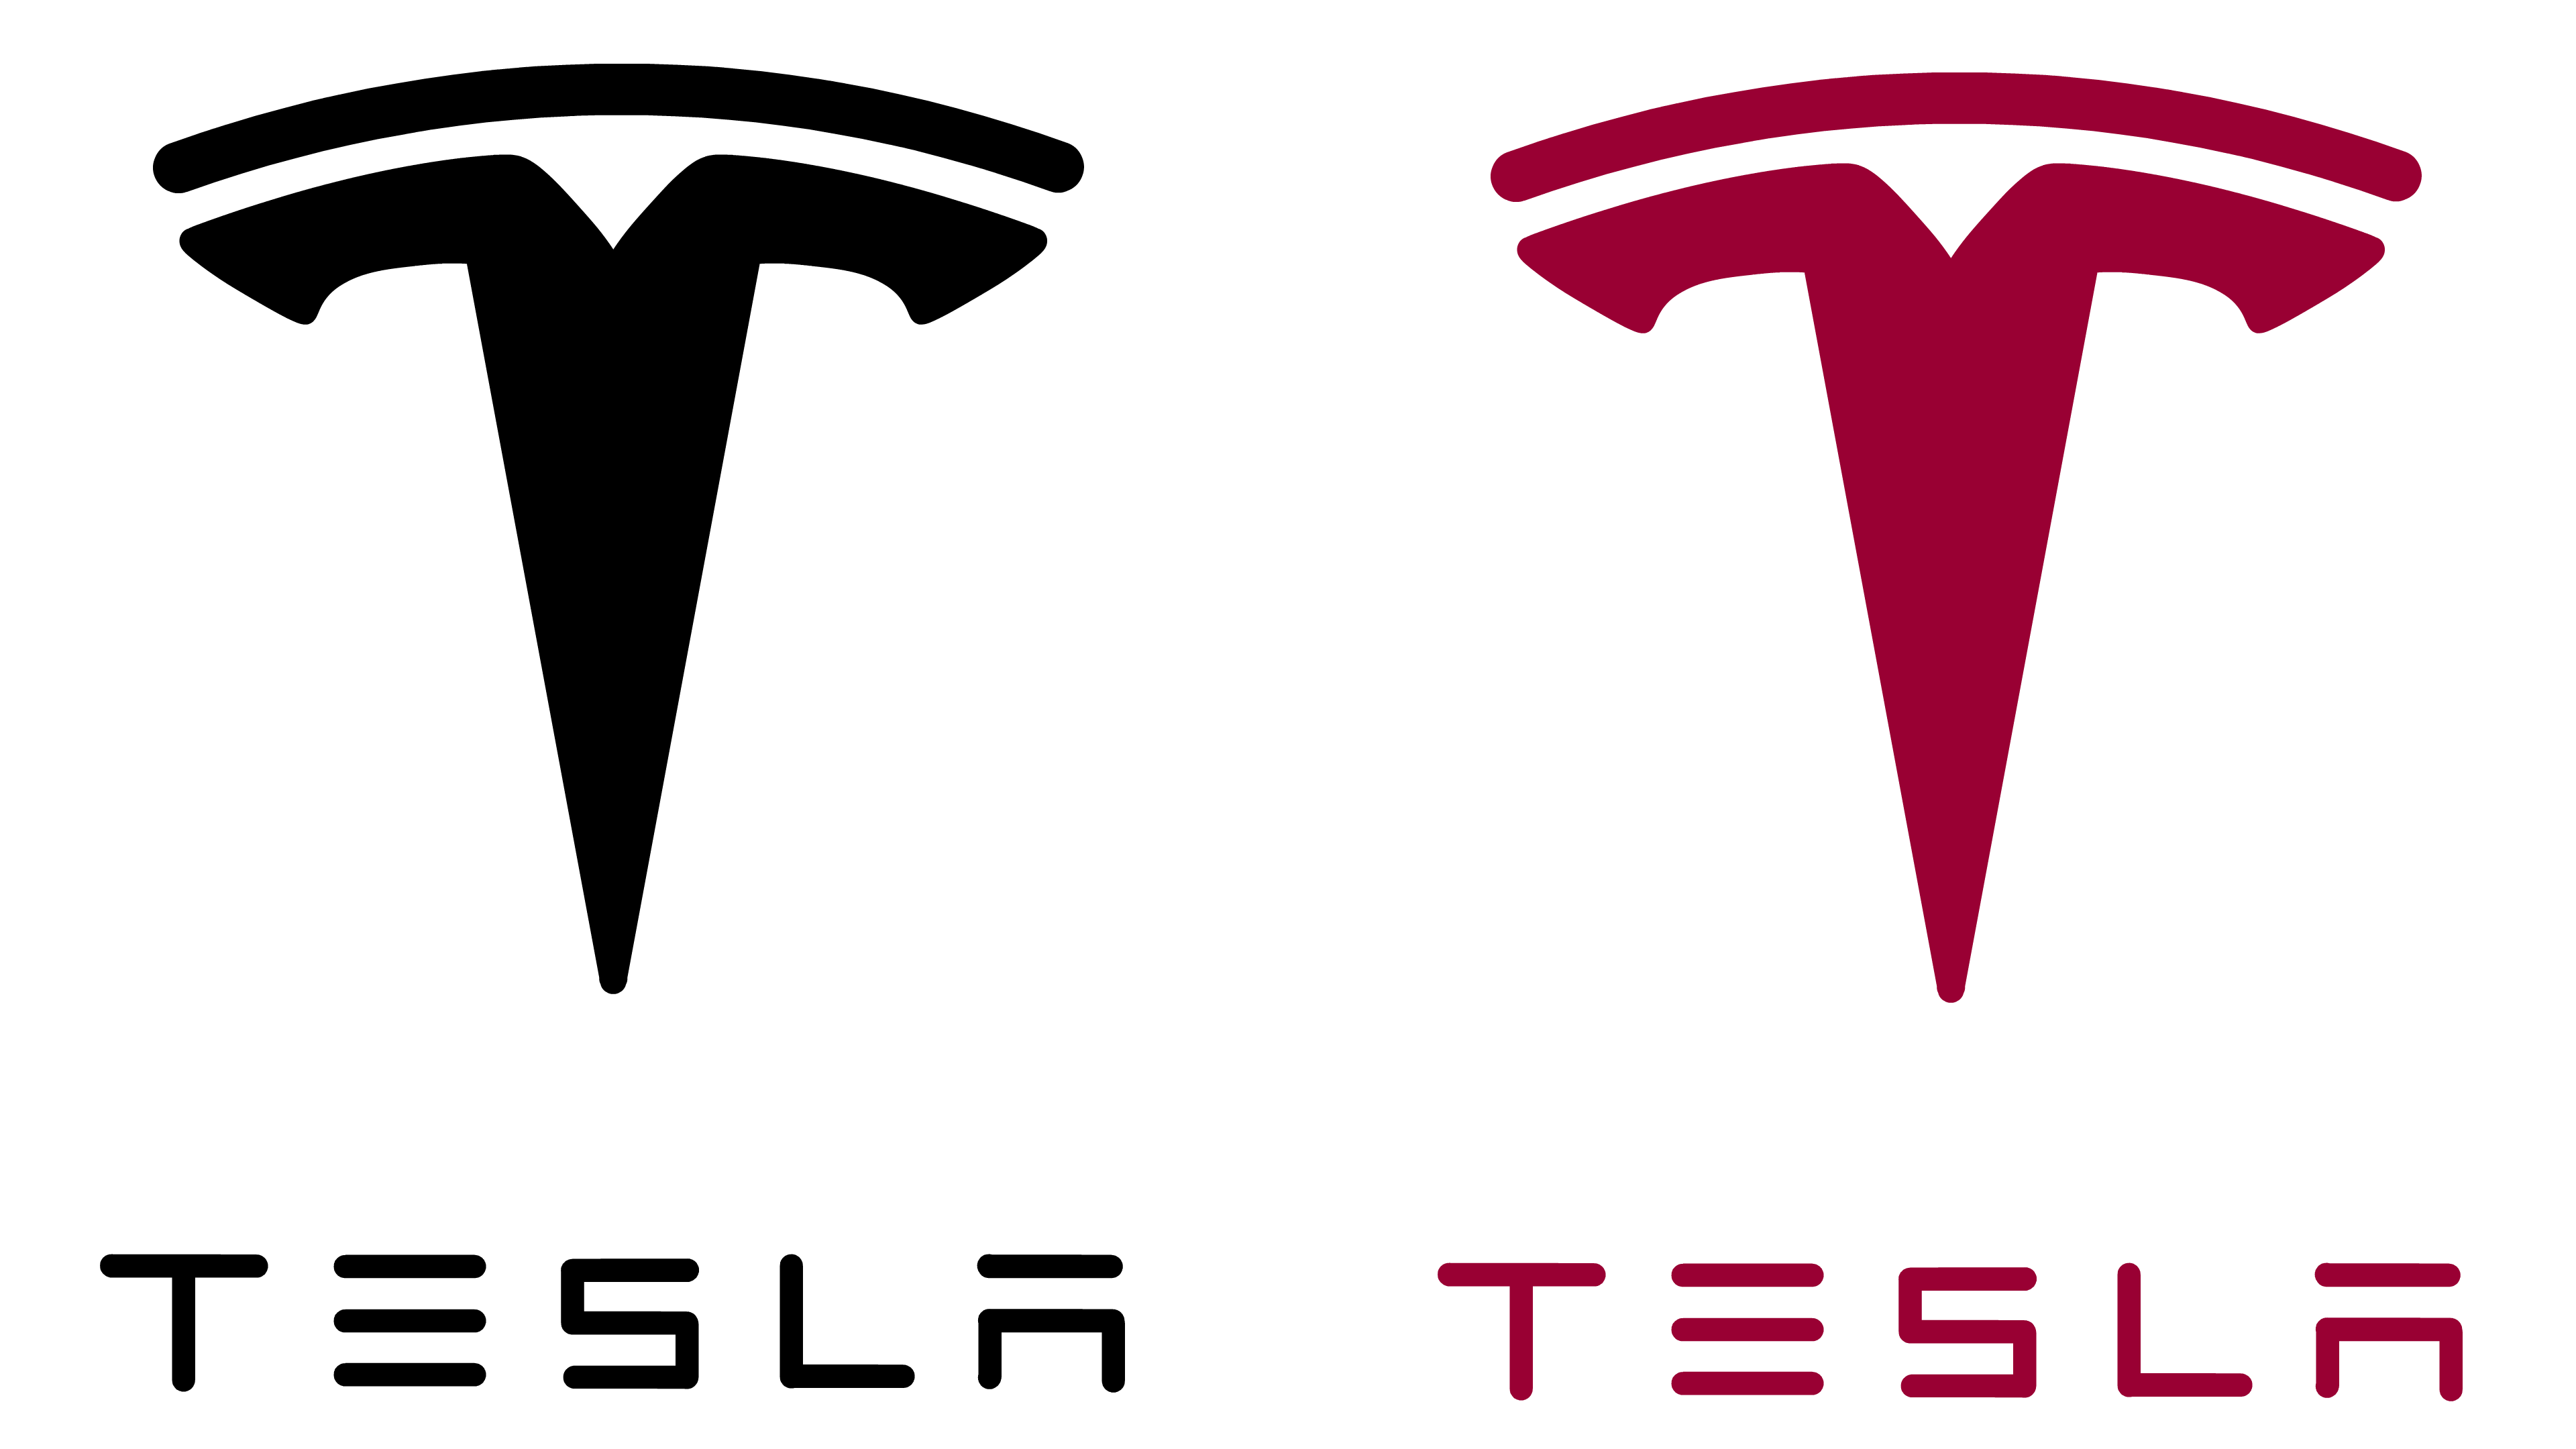 Tesla Logo PNG Isolated Image